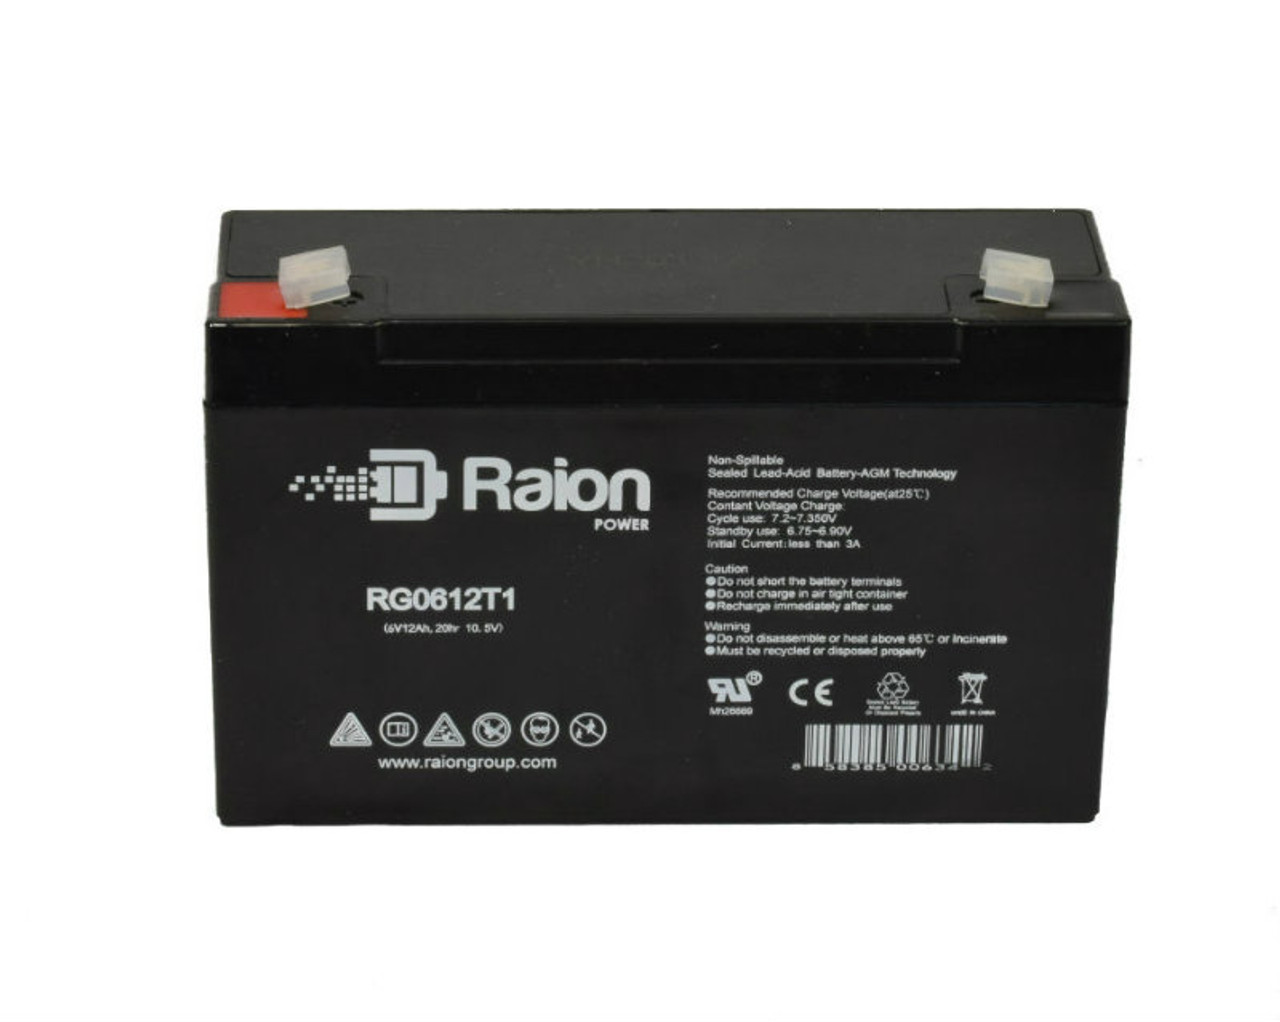 Raion Power RG06120T1 SLA Battery for Big Beam 2CL6S8